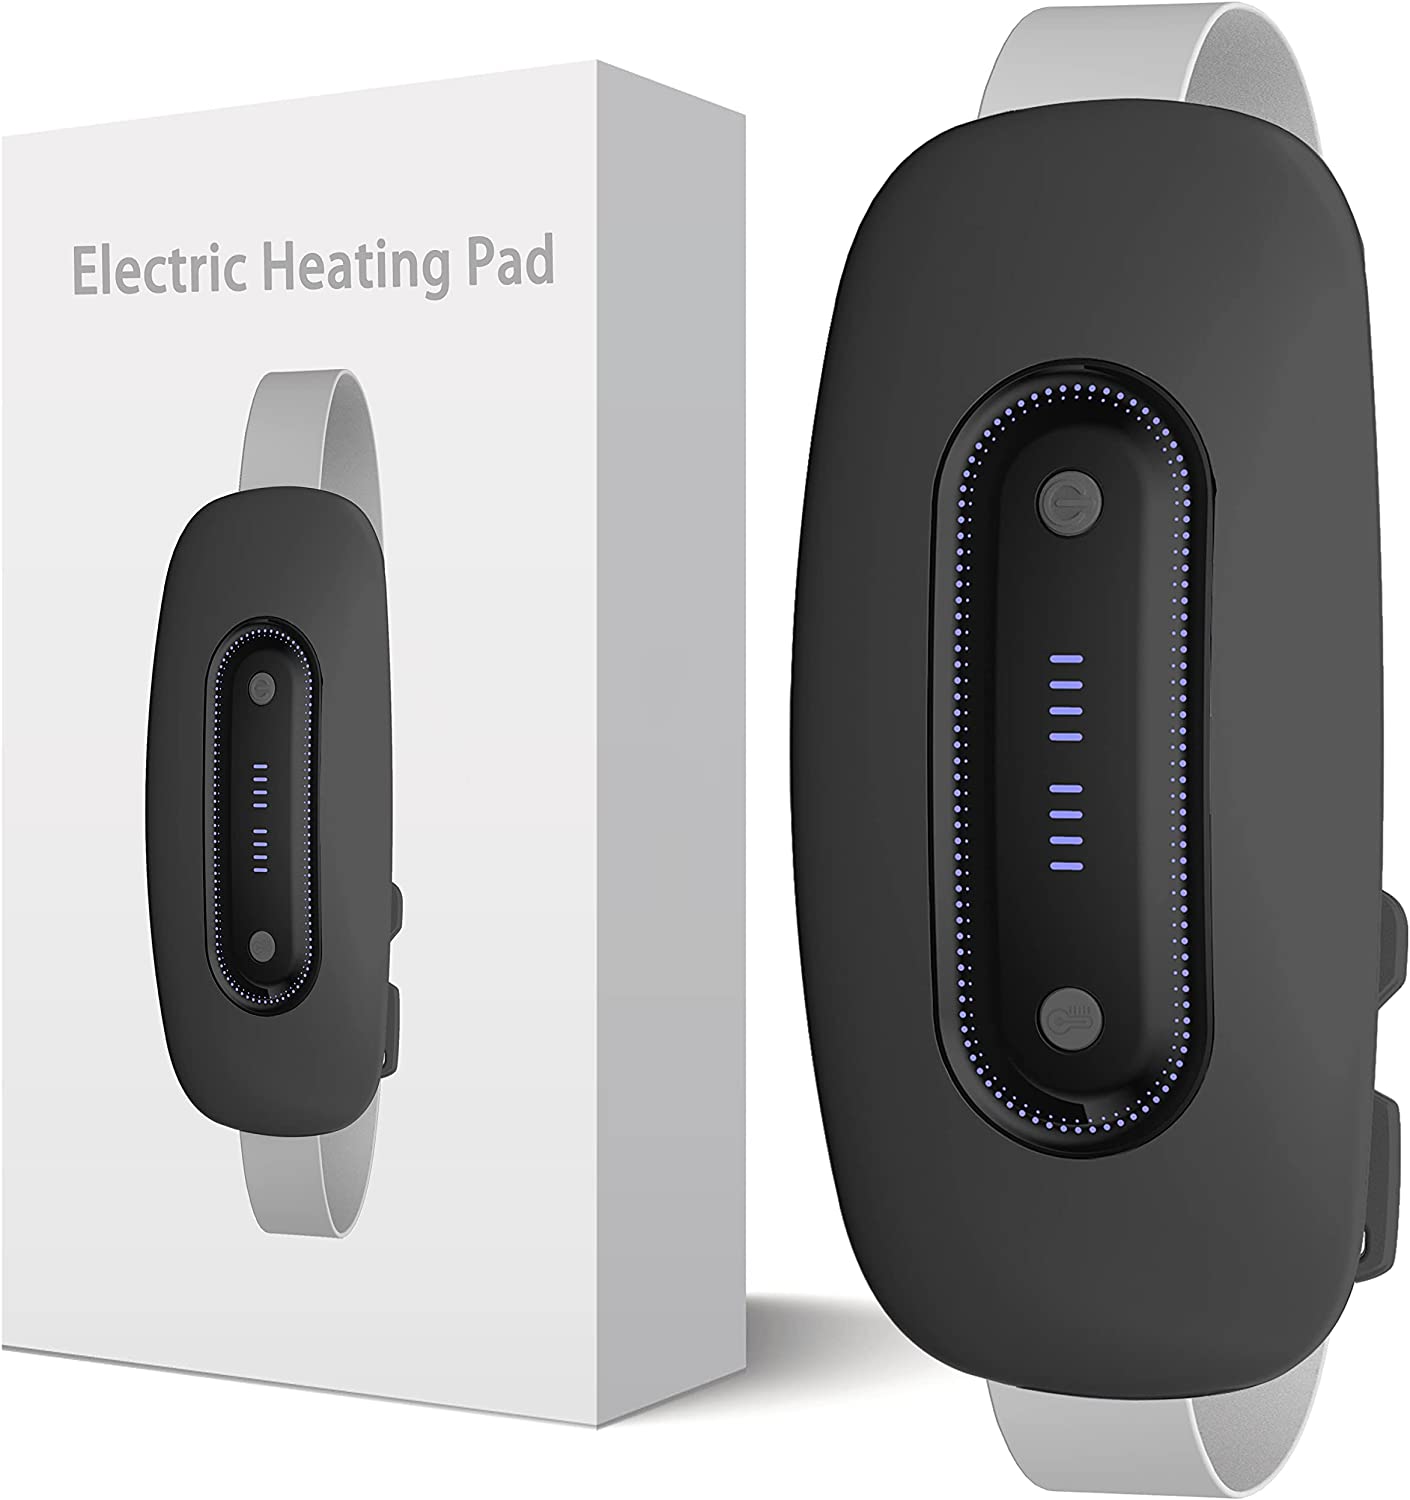 Small, inexpensive thing: wireless heating pad